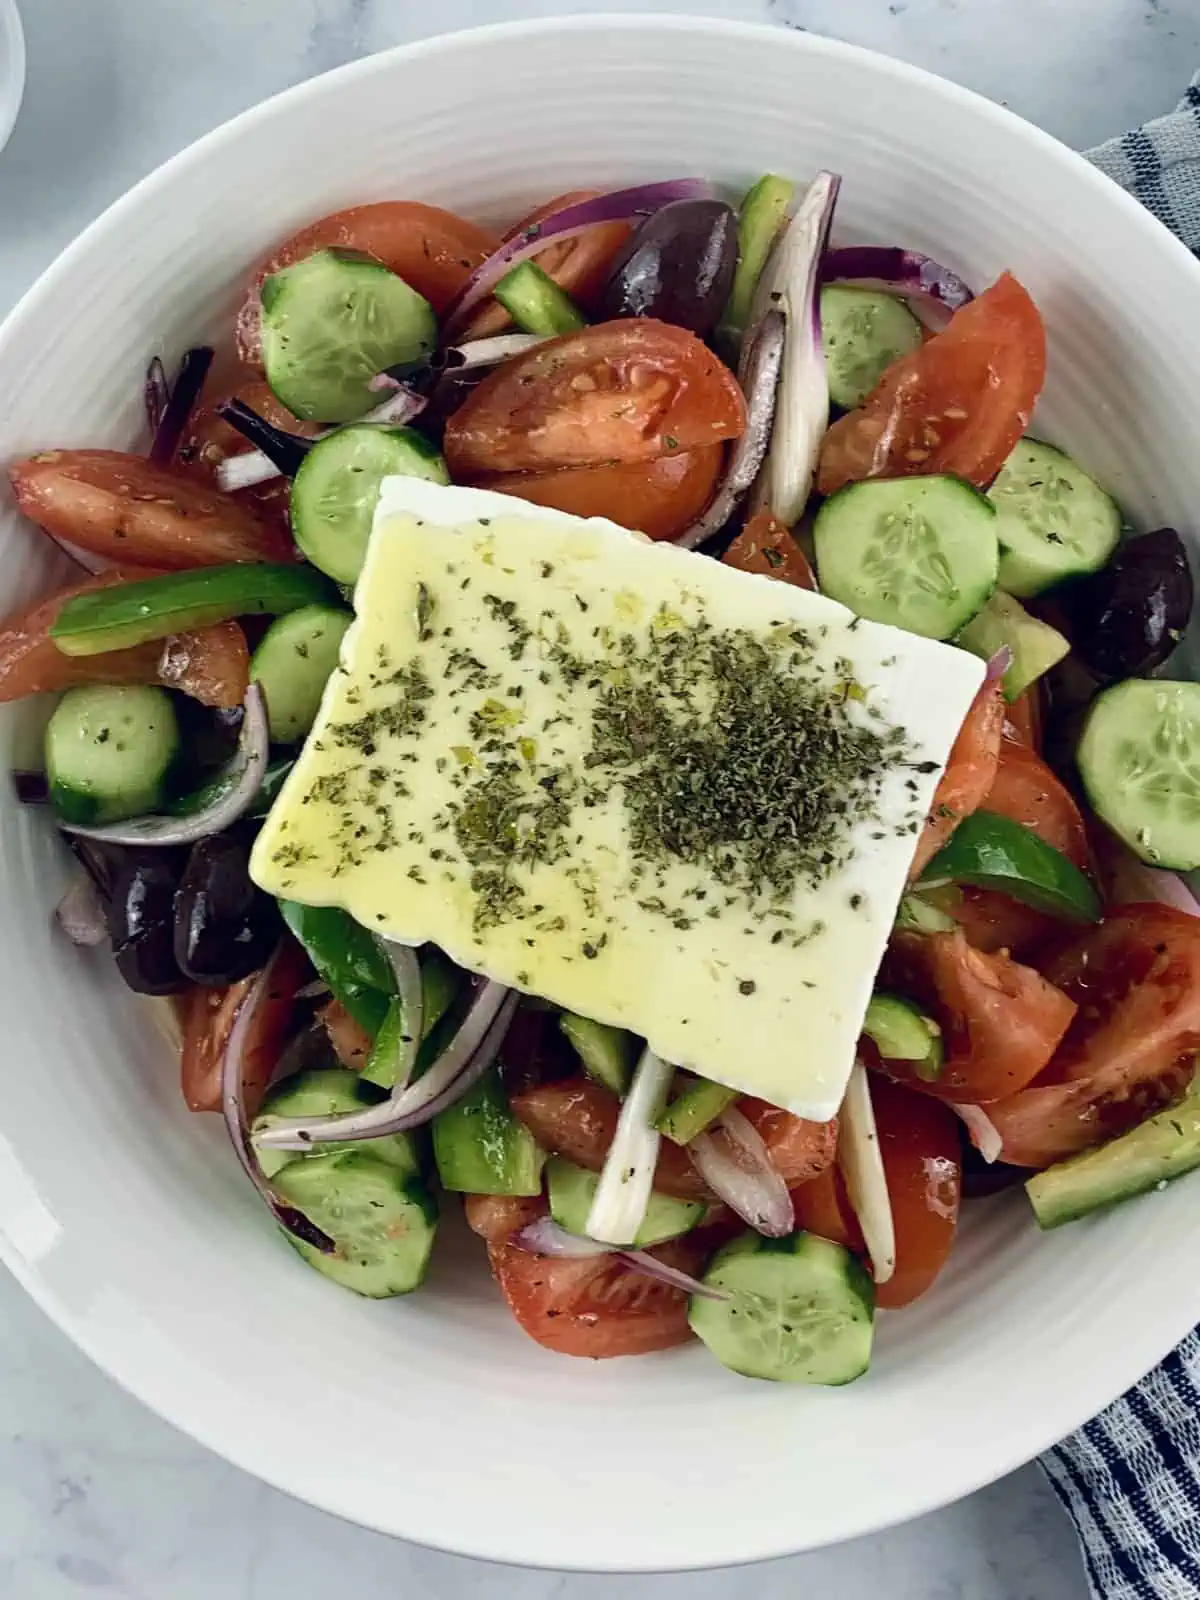 Labelled ingredients needed to make a Horiatiki Salad.